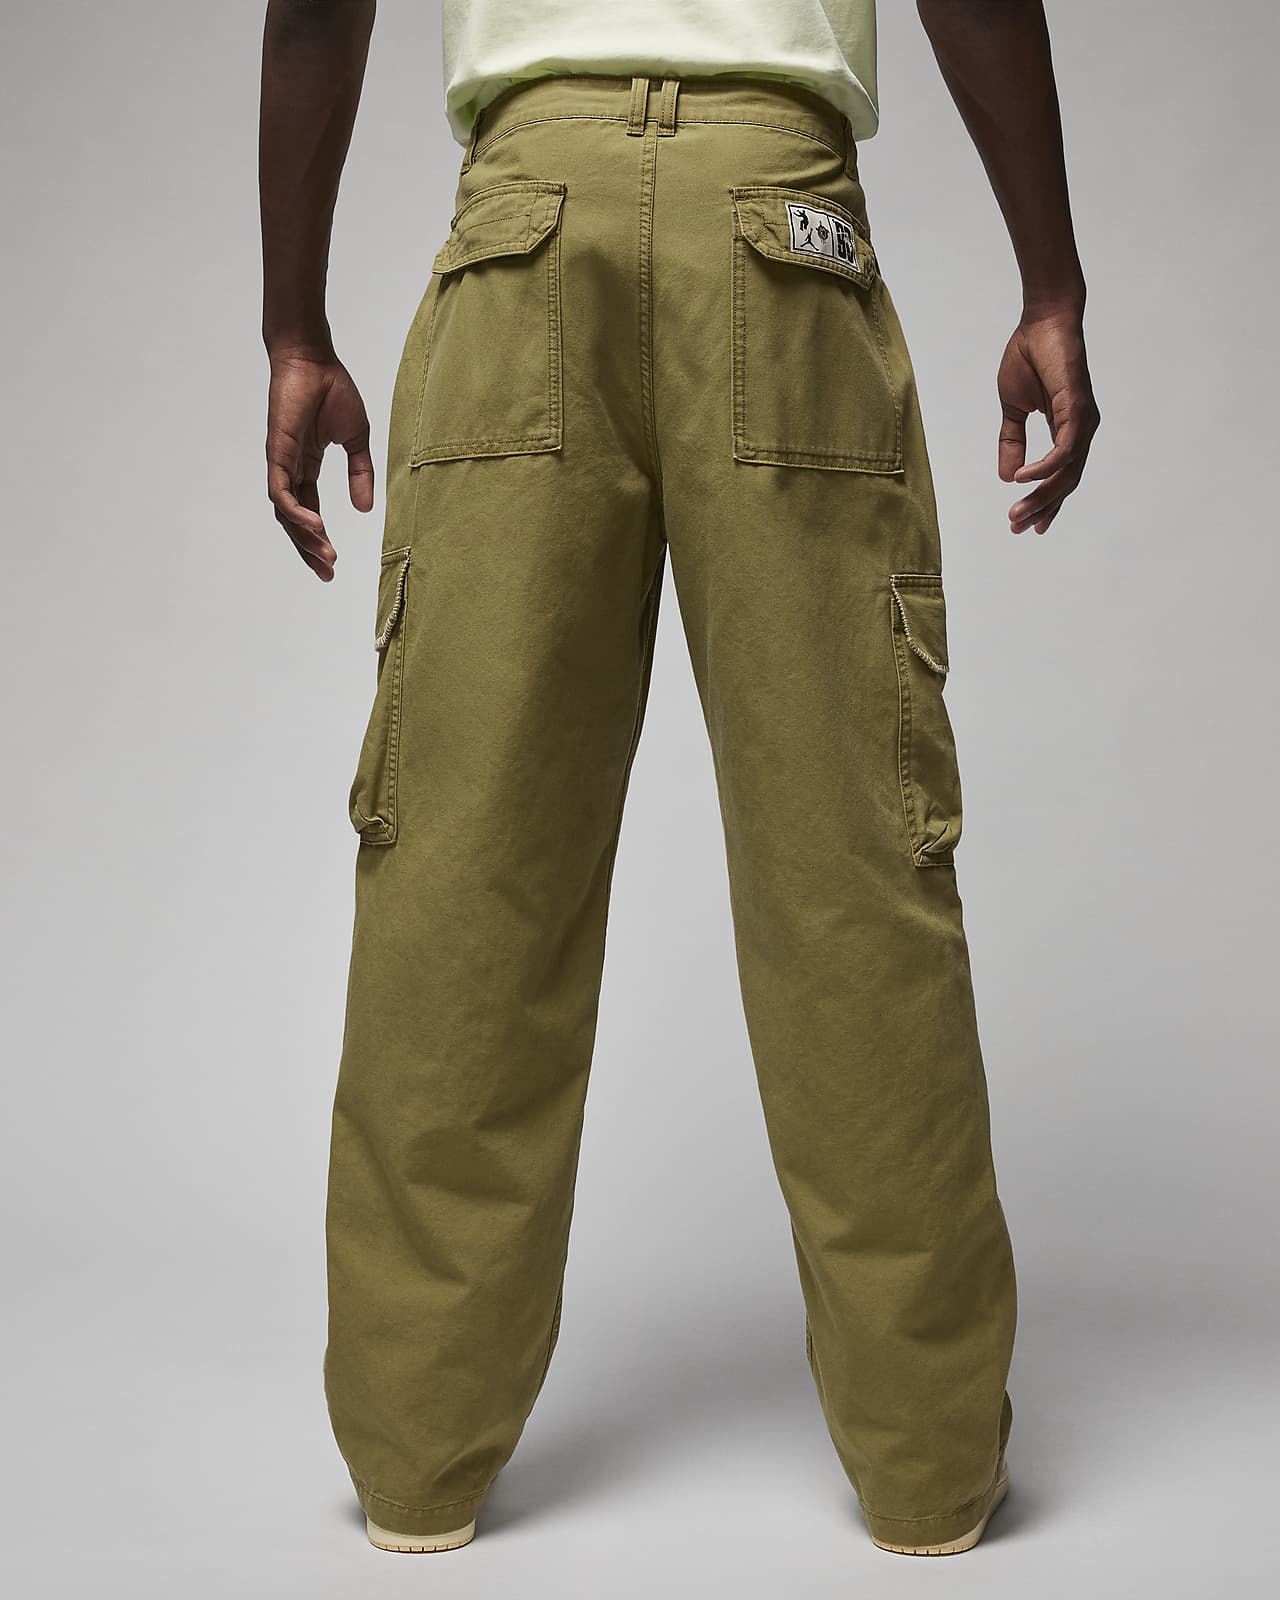 SILVERCELL Girls Cotton Jogger Cargo Pants Loose Street Hip Hop Dance  Sweatpant Trousers 3-13T - Walmart.com